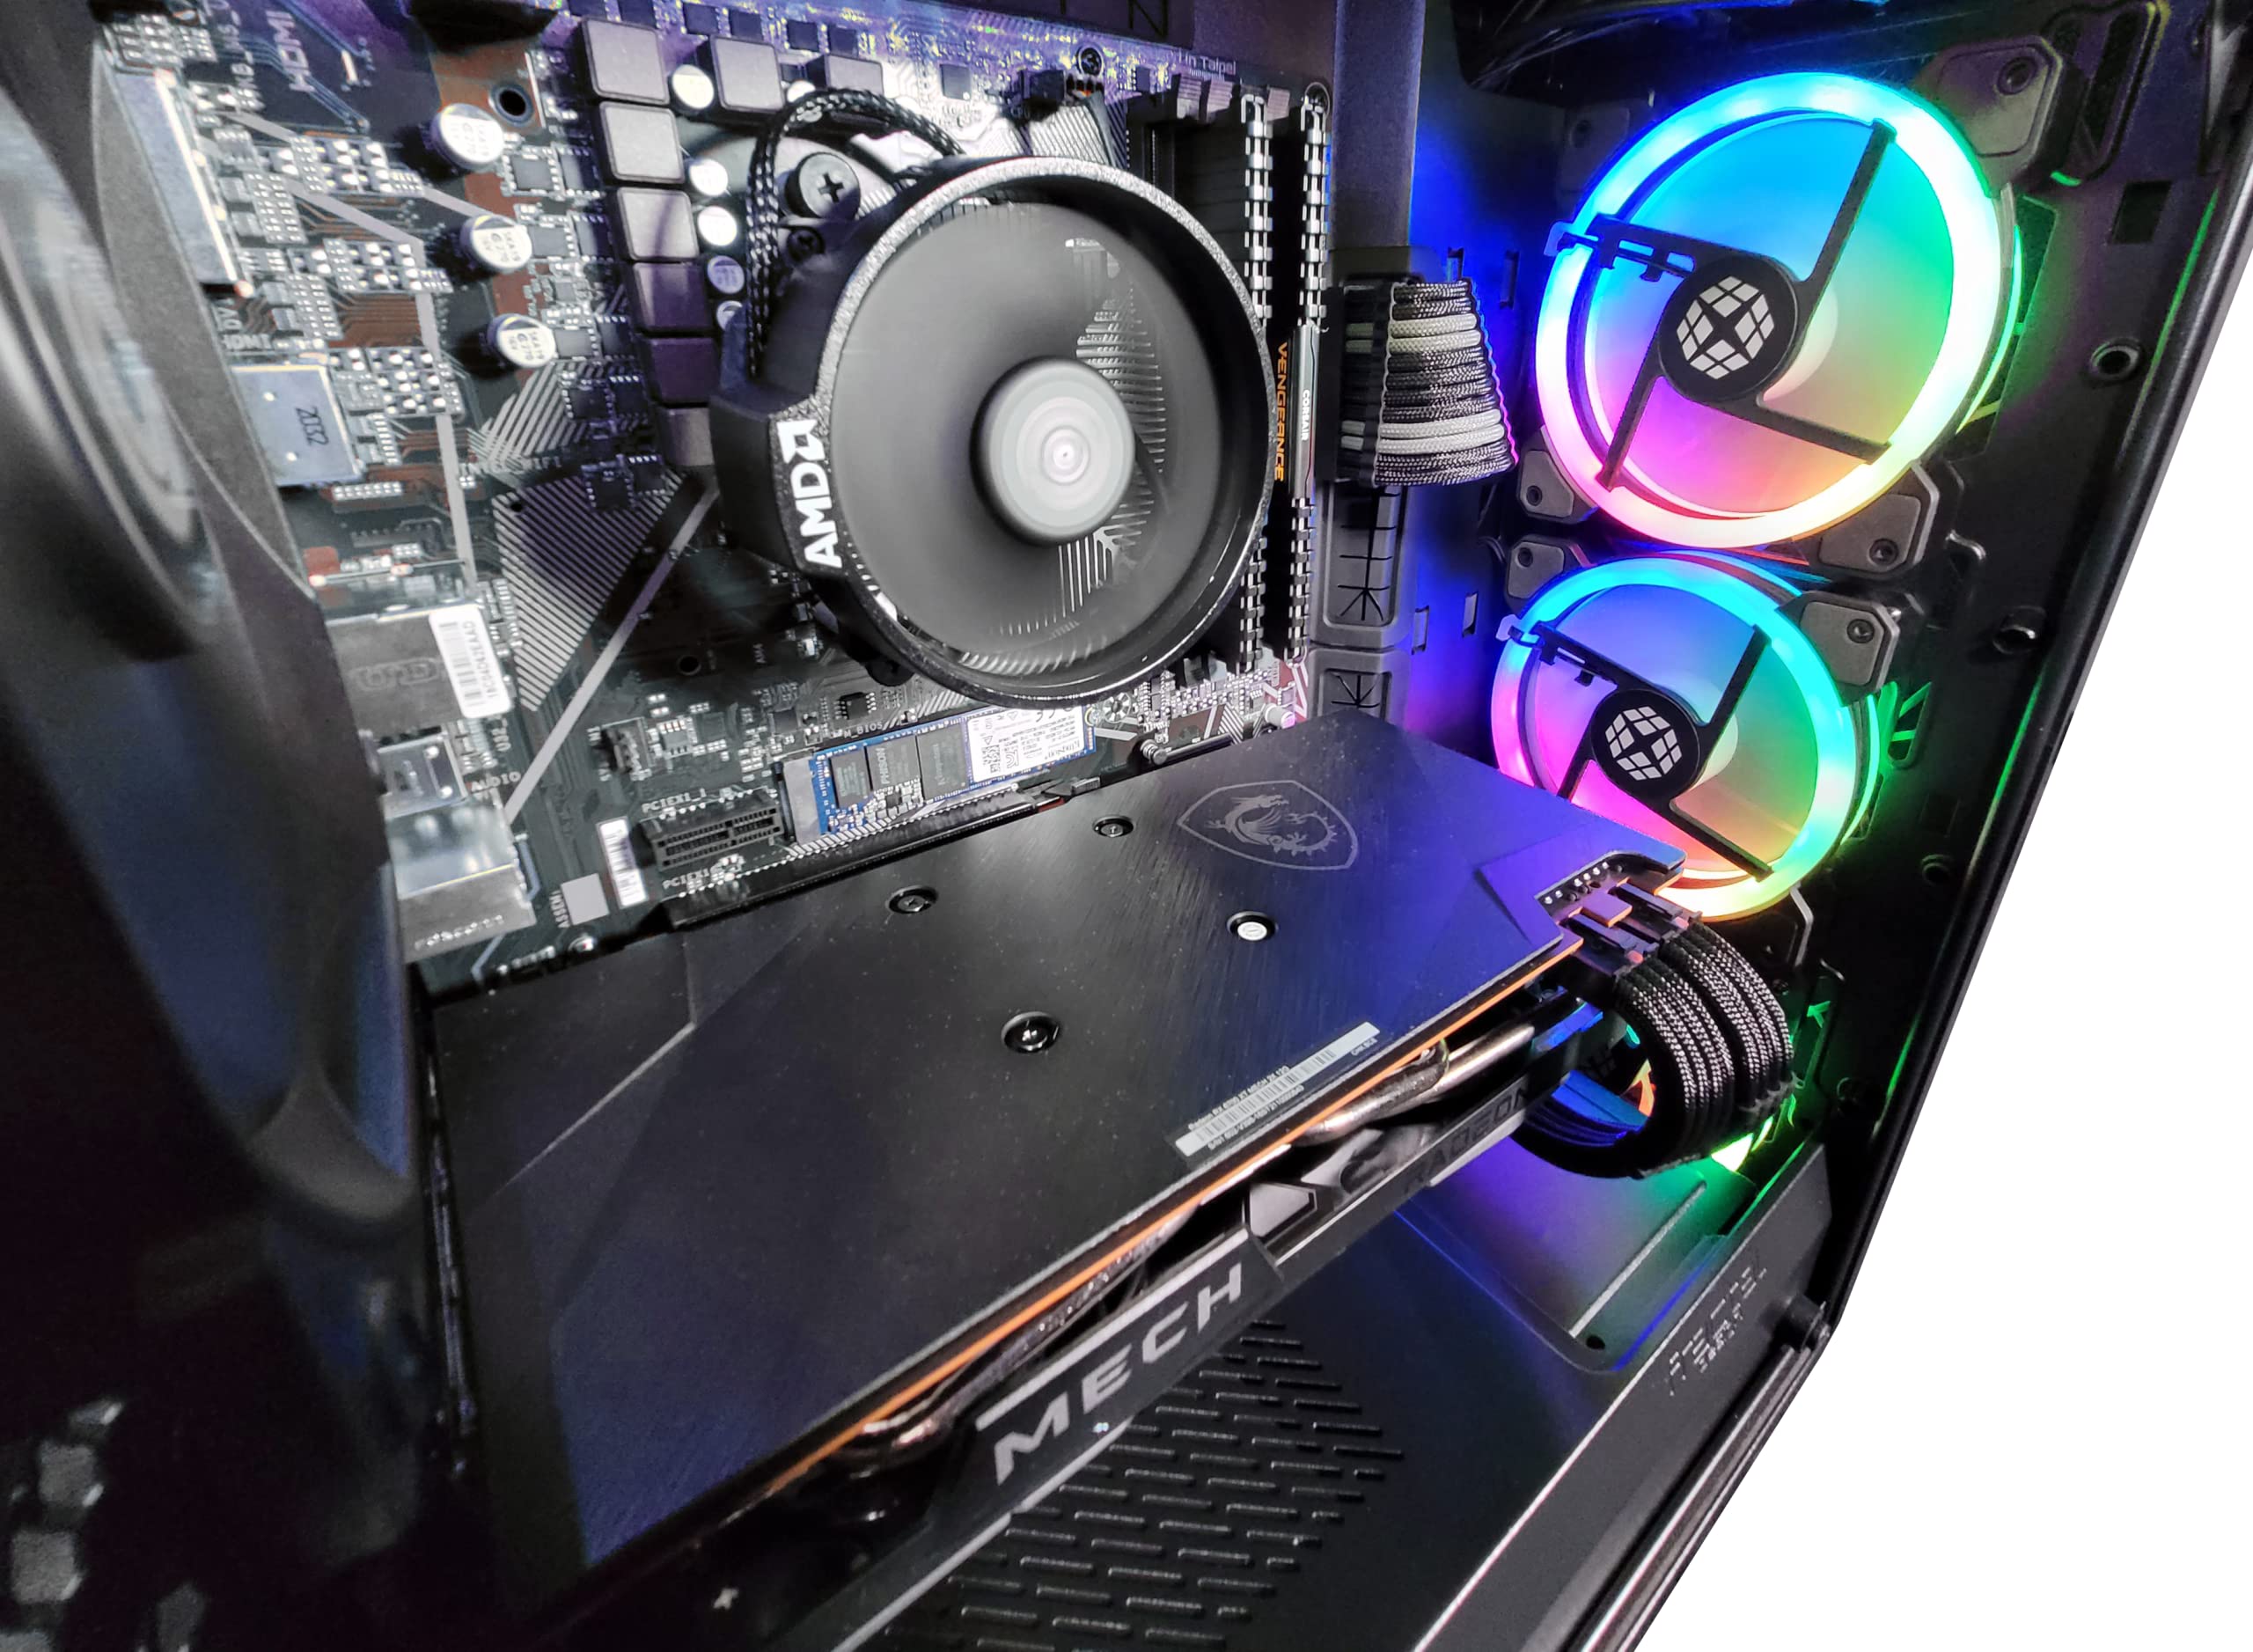 G3 Meshify Optimal Gaming Desktop (AMD Ryzen 5 5600G 6-core 4.4GHz Turbo, 16GB DDR4 RAM, 500GB NVMe SSD, Radeon Graphics, Windows 11) Gamer Computer PC